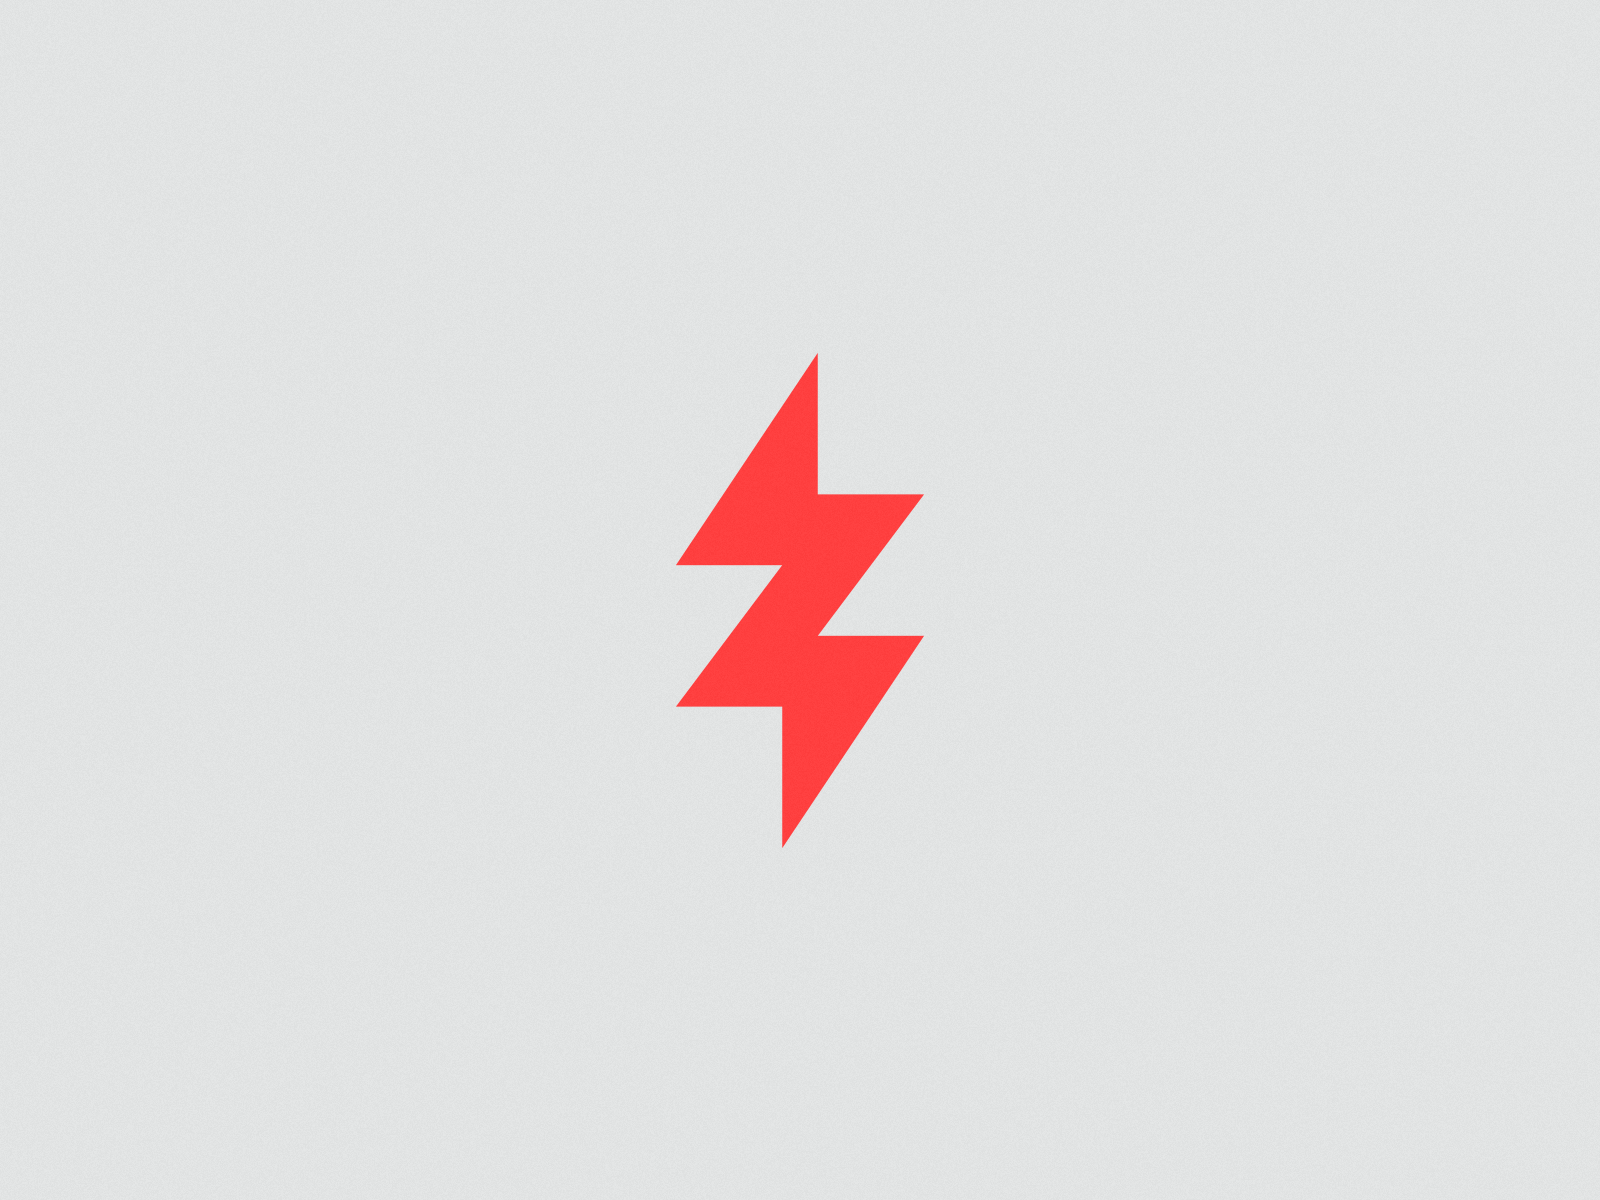 Z letter + lightning - Logo concept by Vinícius Assis on Dribbble